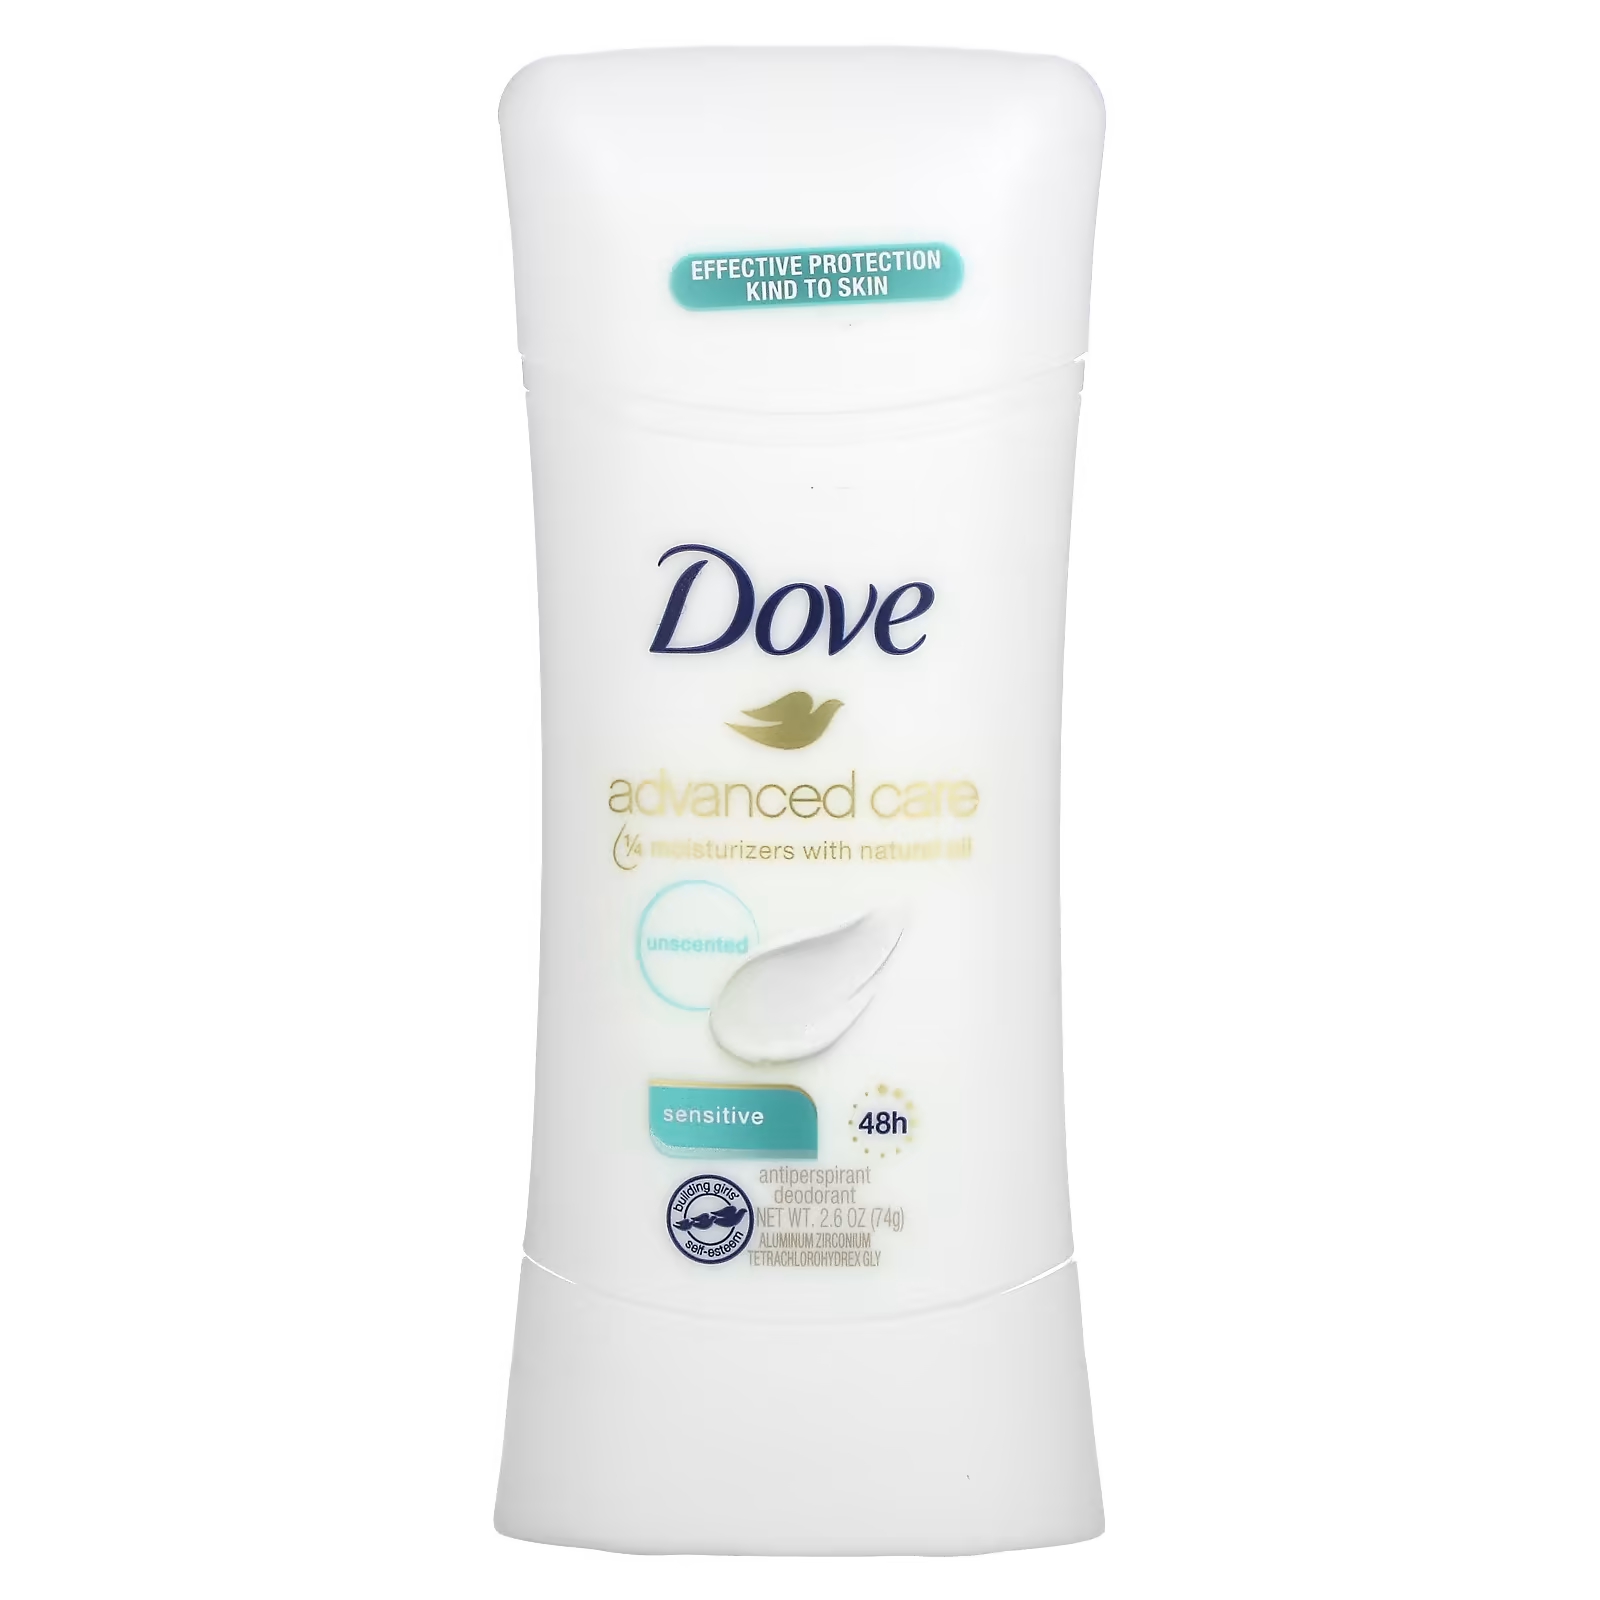 Дезодорант-антиперспирант Dove Advanced Care dove дезодорант антиперспирант advanced care аромат кокос 74 г